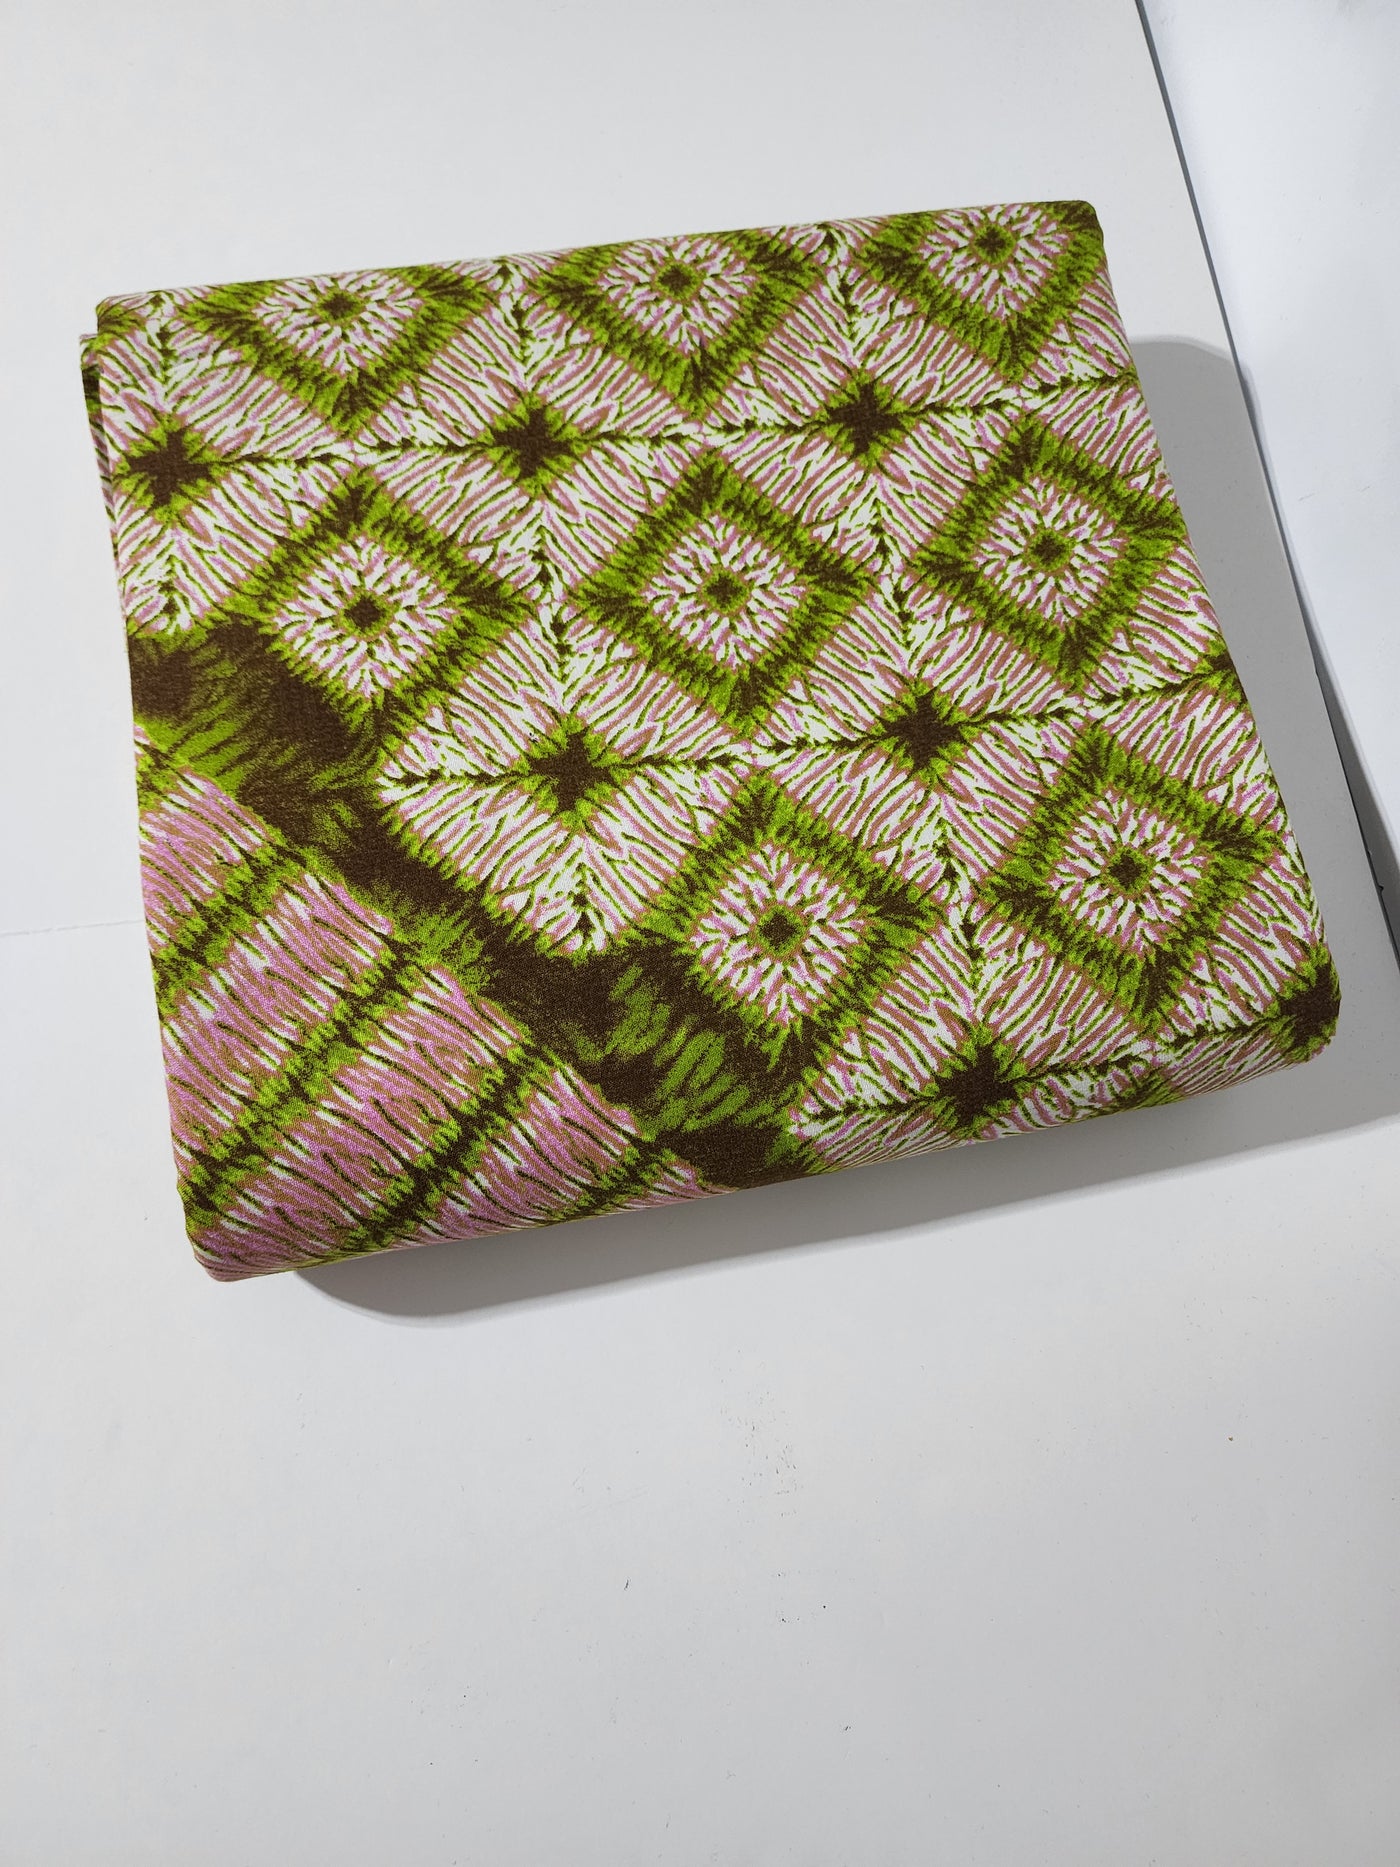 Pink and Green Batik Ankara Print Fabric, ACS0075